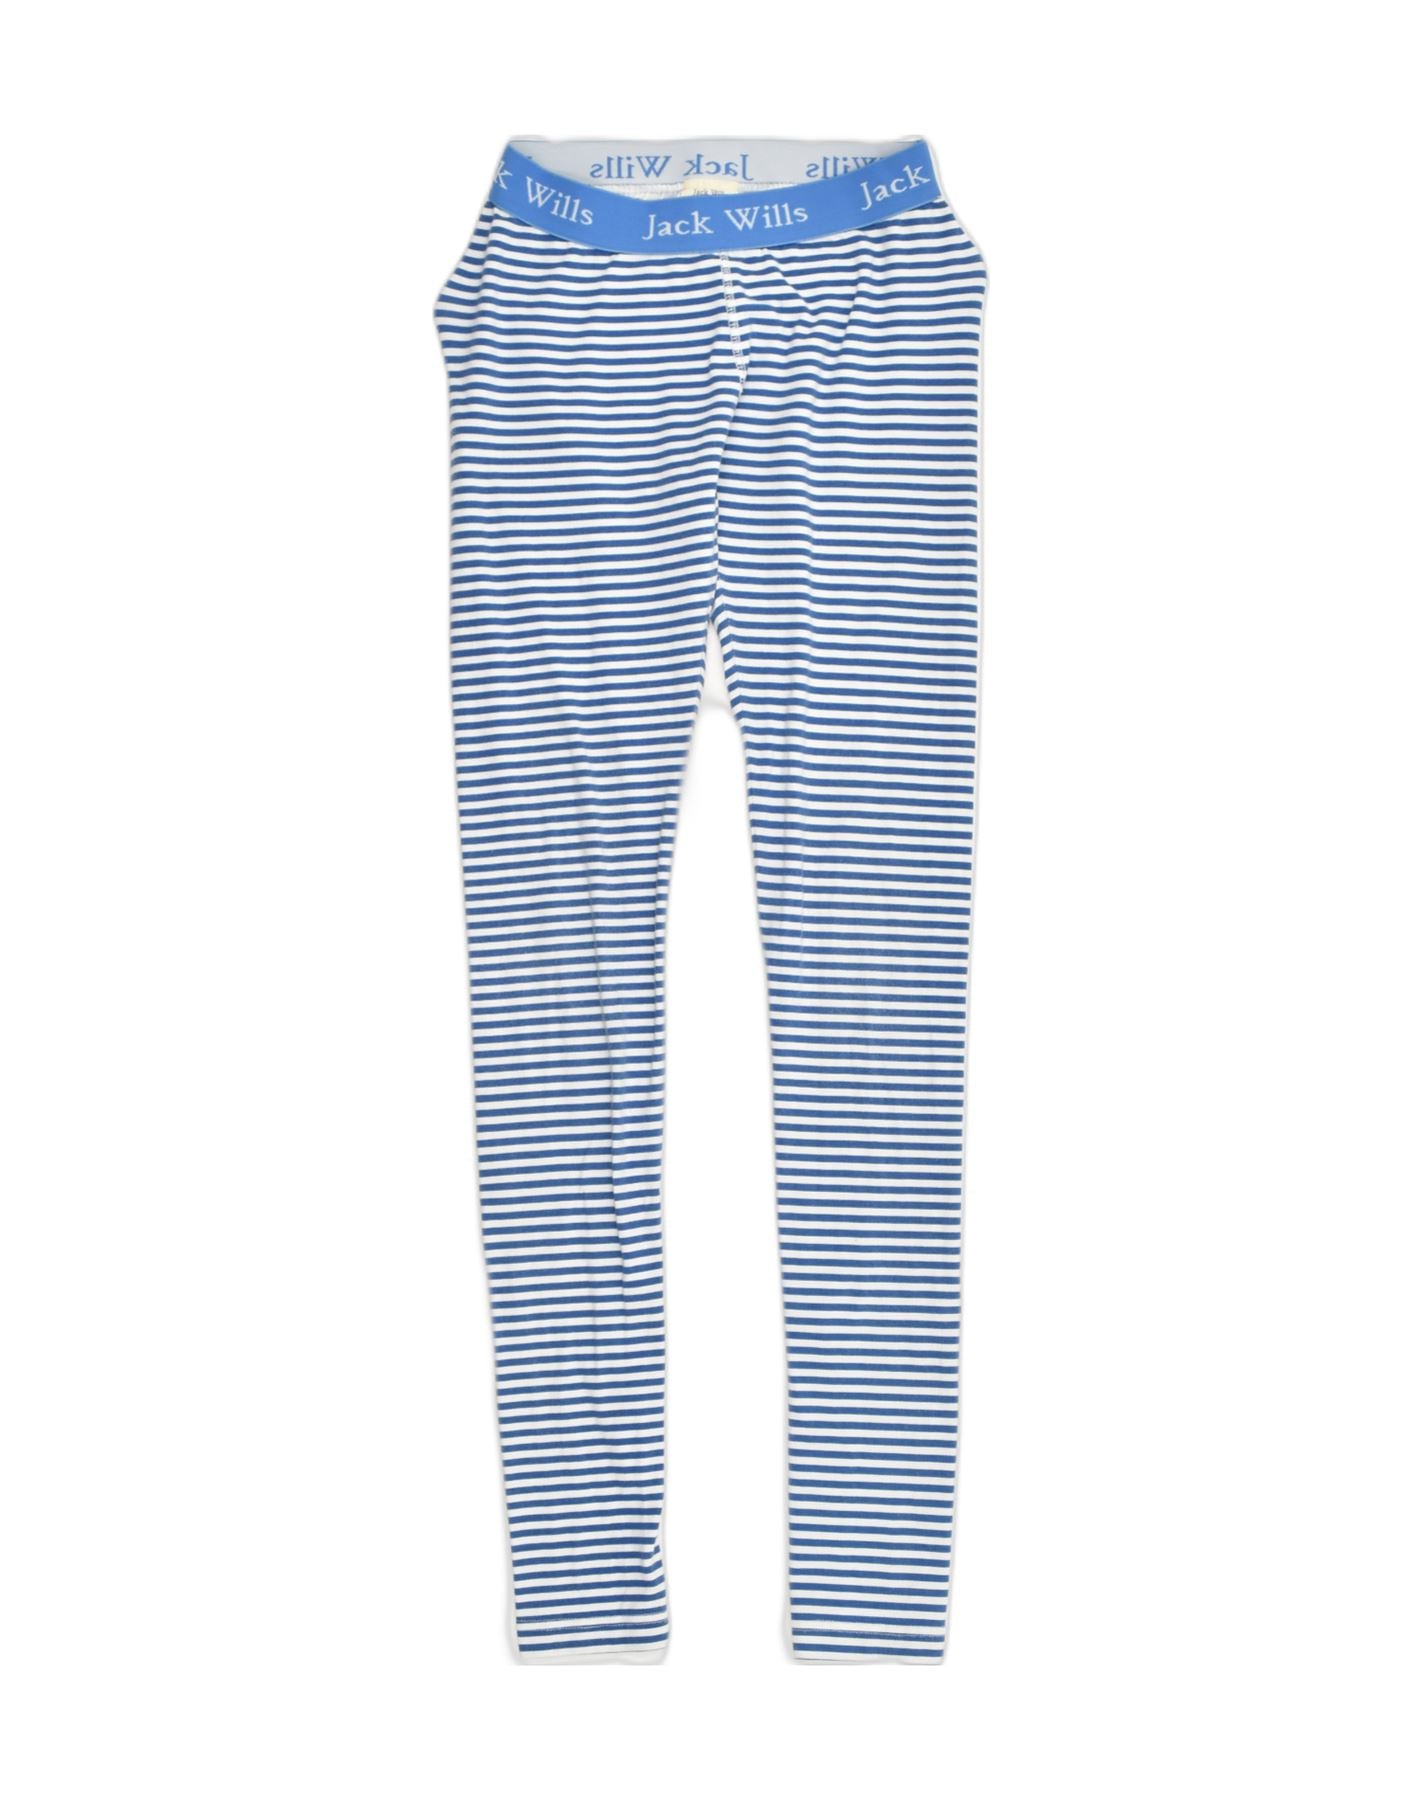 JACK WILLS Womens Underwear Leggings UK 6 XS Blue Striped Cotton, Vintage  & Second-Hand Clothing Online